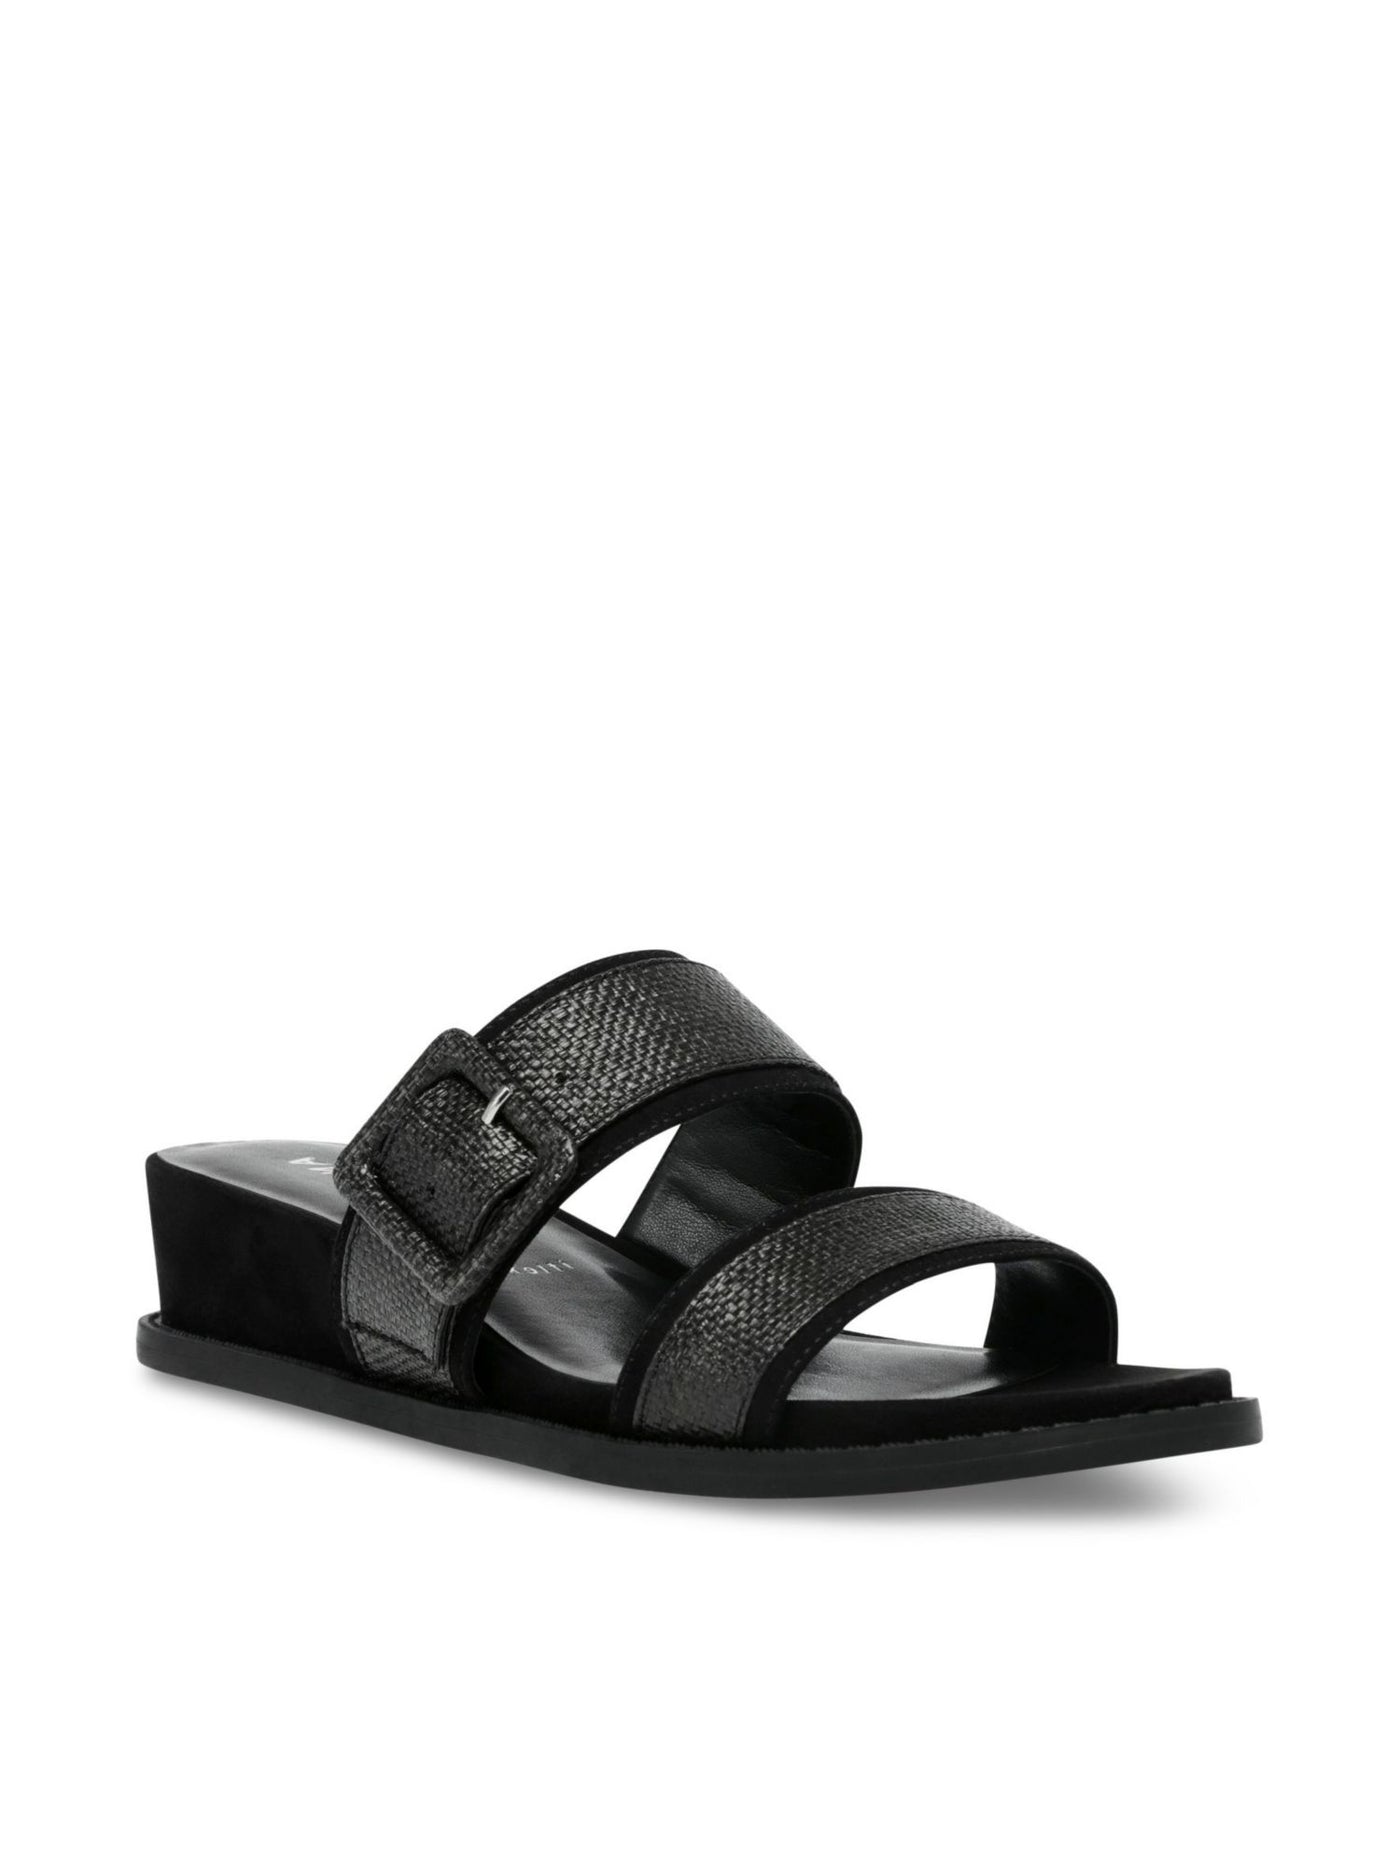 ANNE KLEIN Womens Black Buckle Accent Comfort Brenda Round Toe Wedge Slip On Slide Sandals Shoes 10.5 M